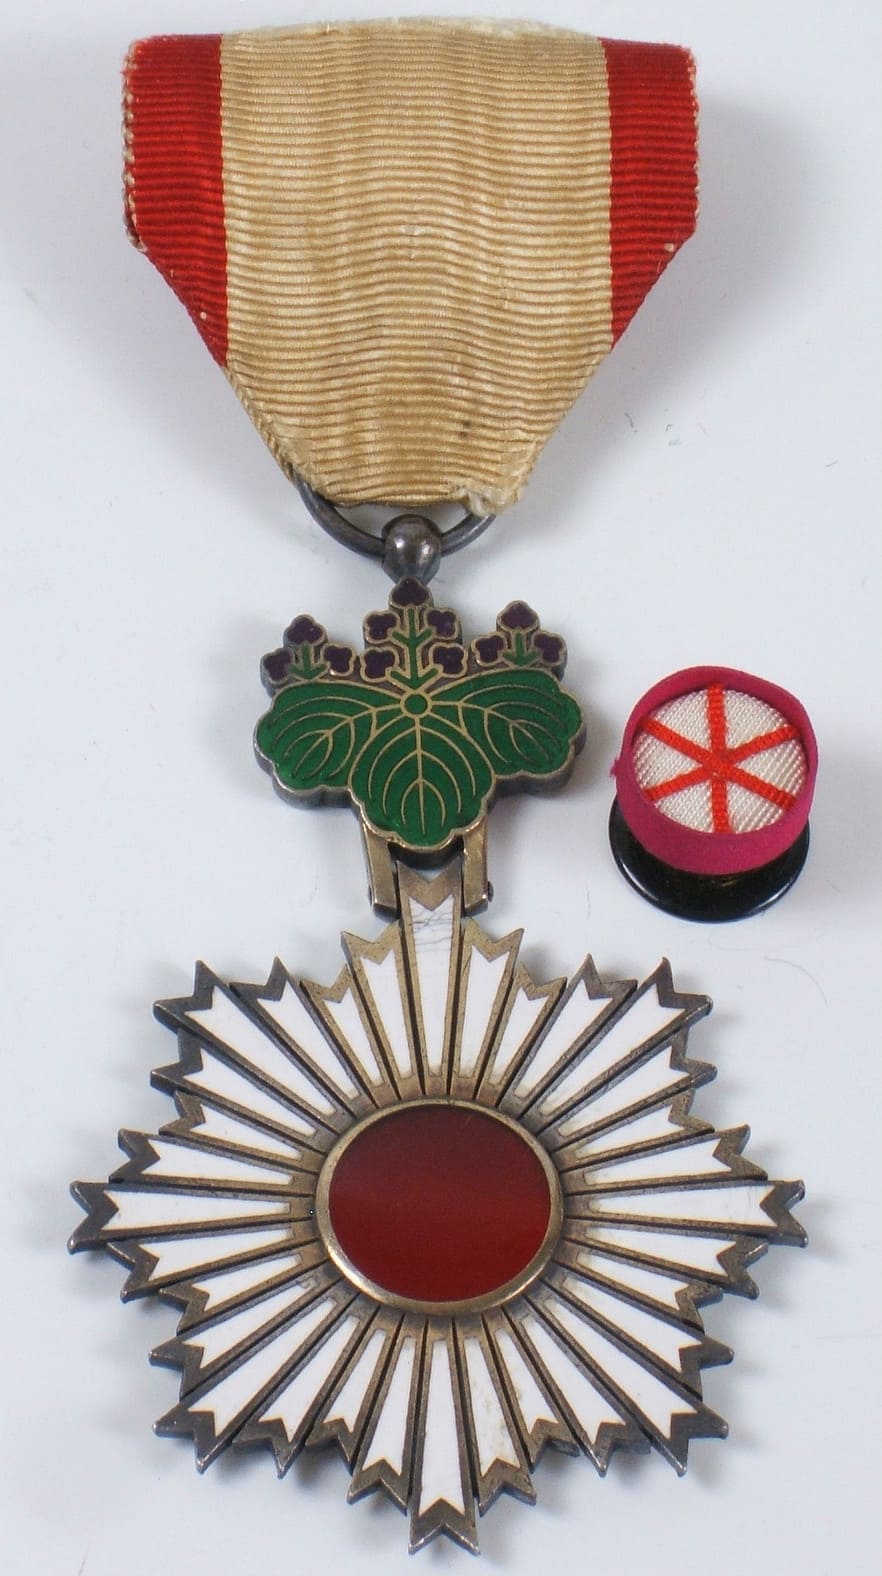 5th class  Order  of Rising Sun with mark  ナ.jpg